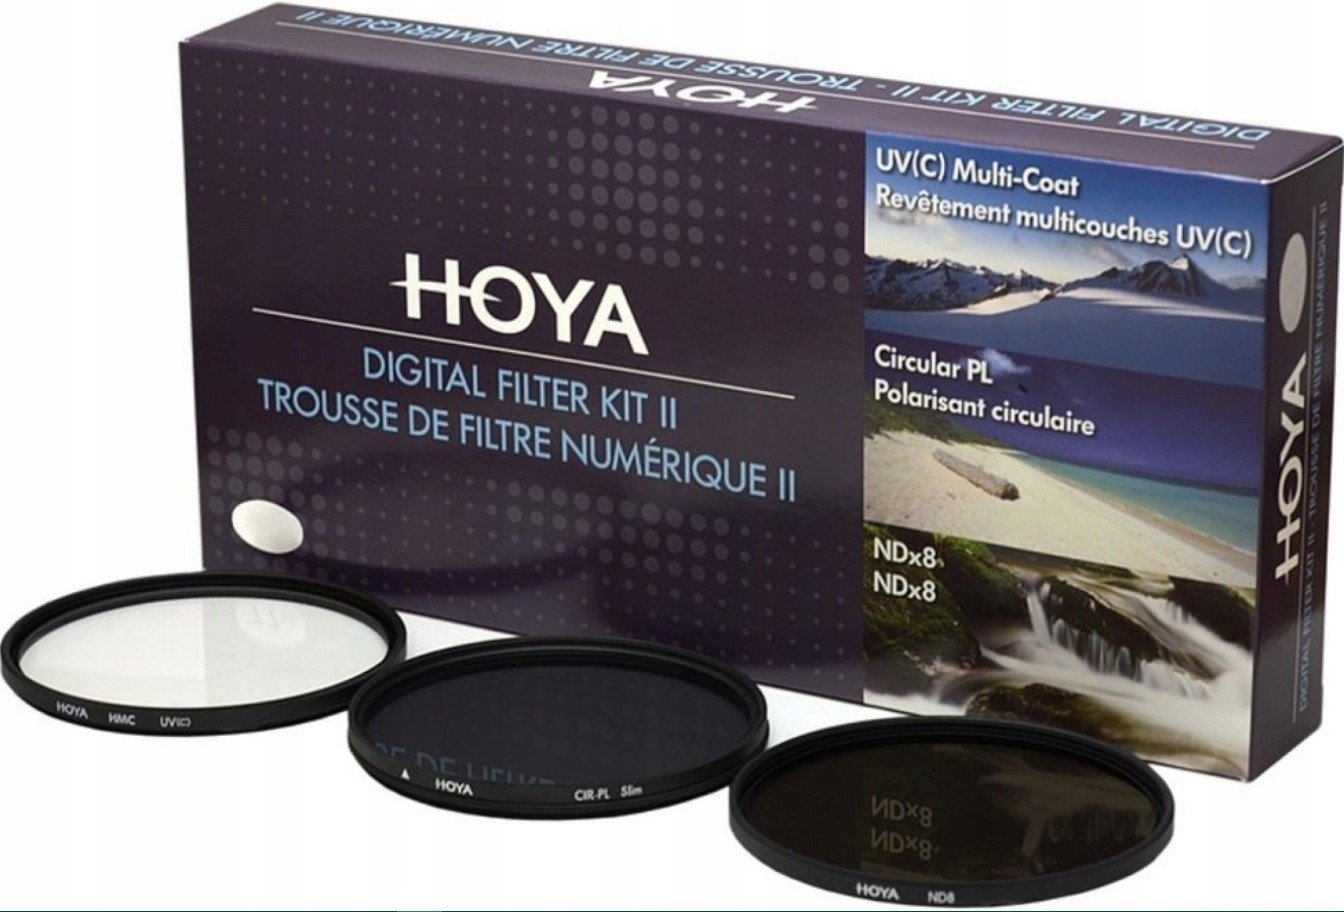 Hoya digital filtr kit II 46mm